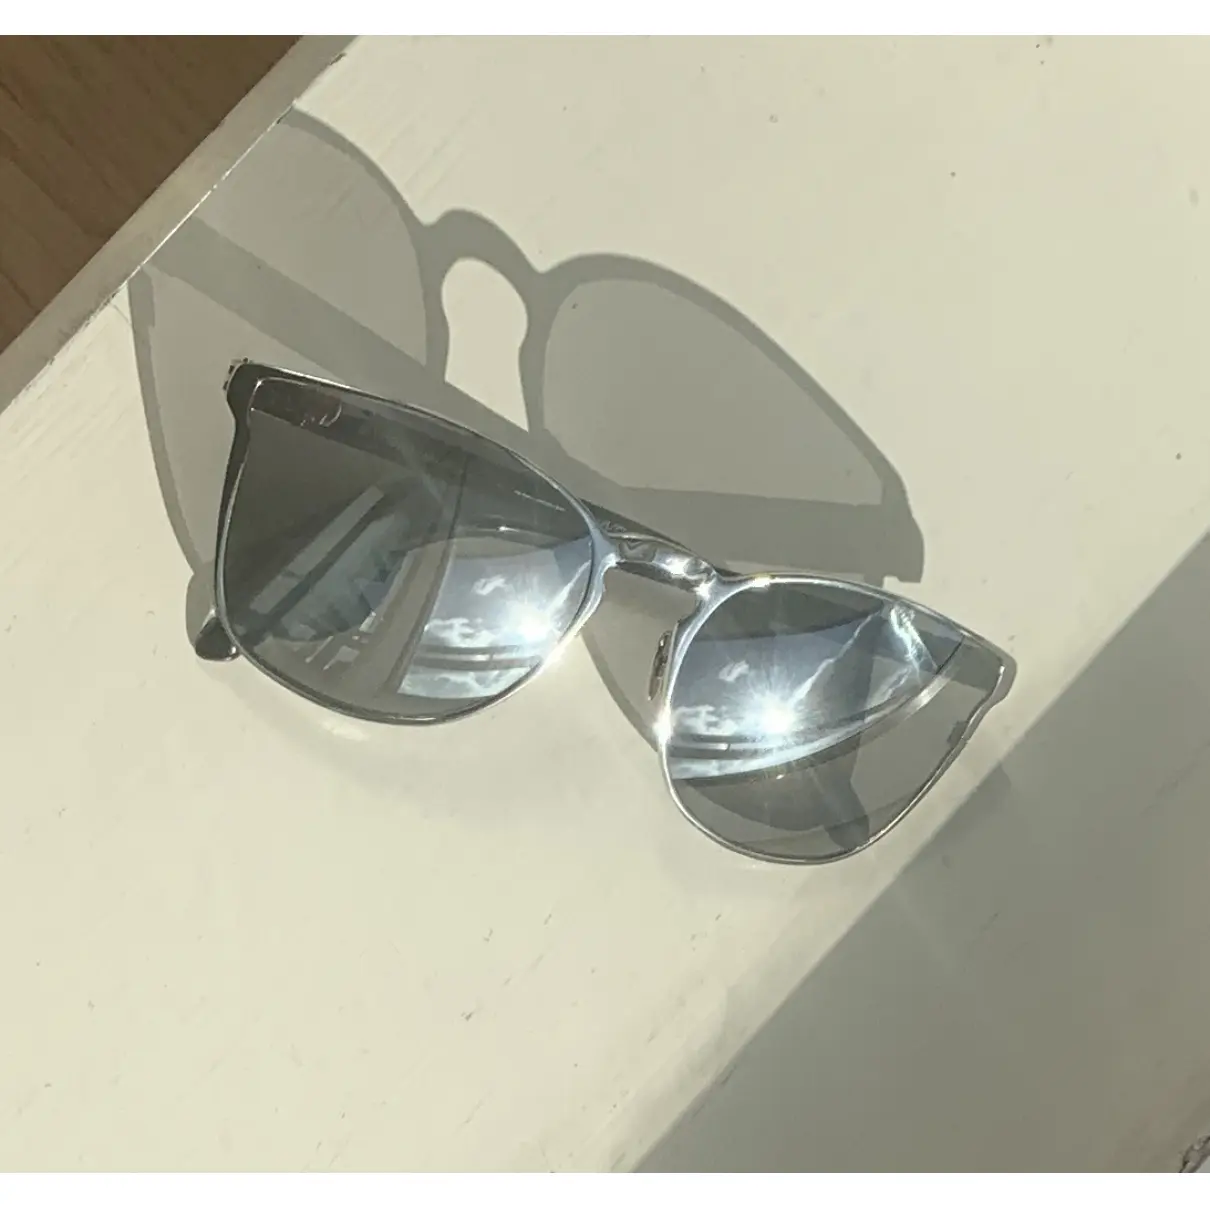 Buy Linda Farrow Sunglasses online